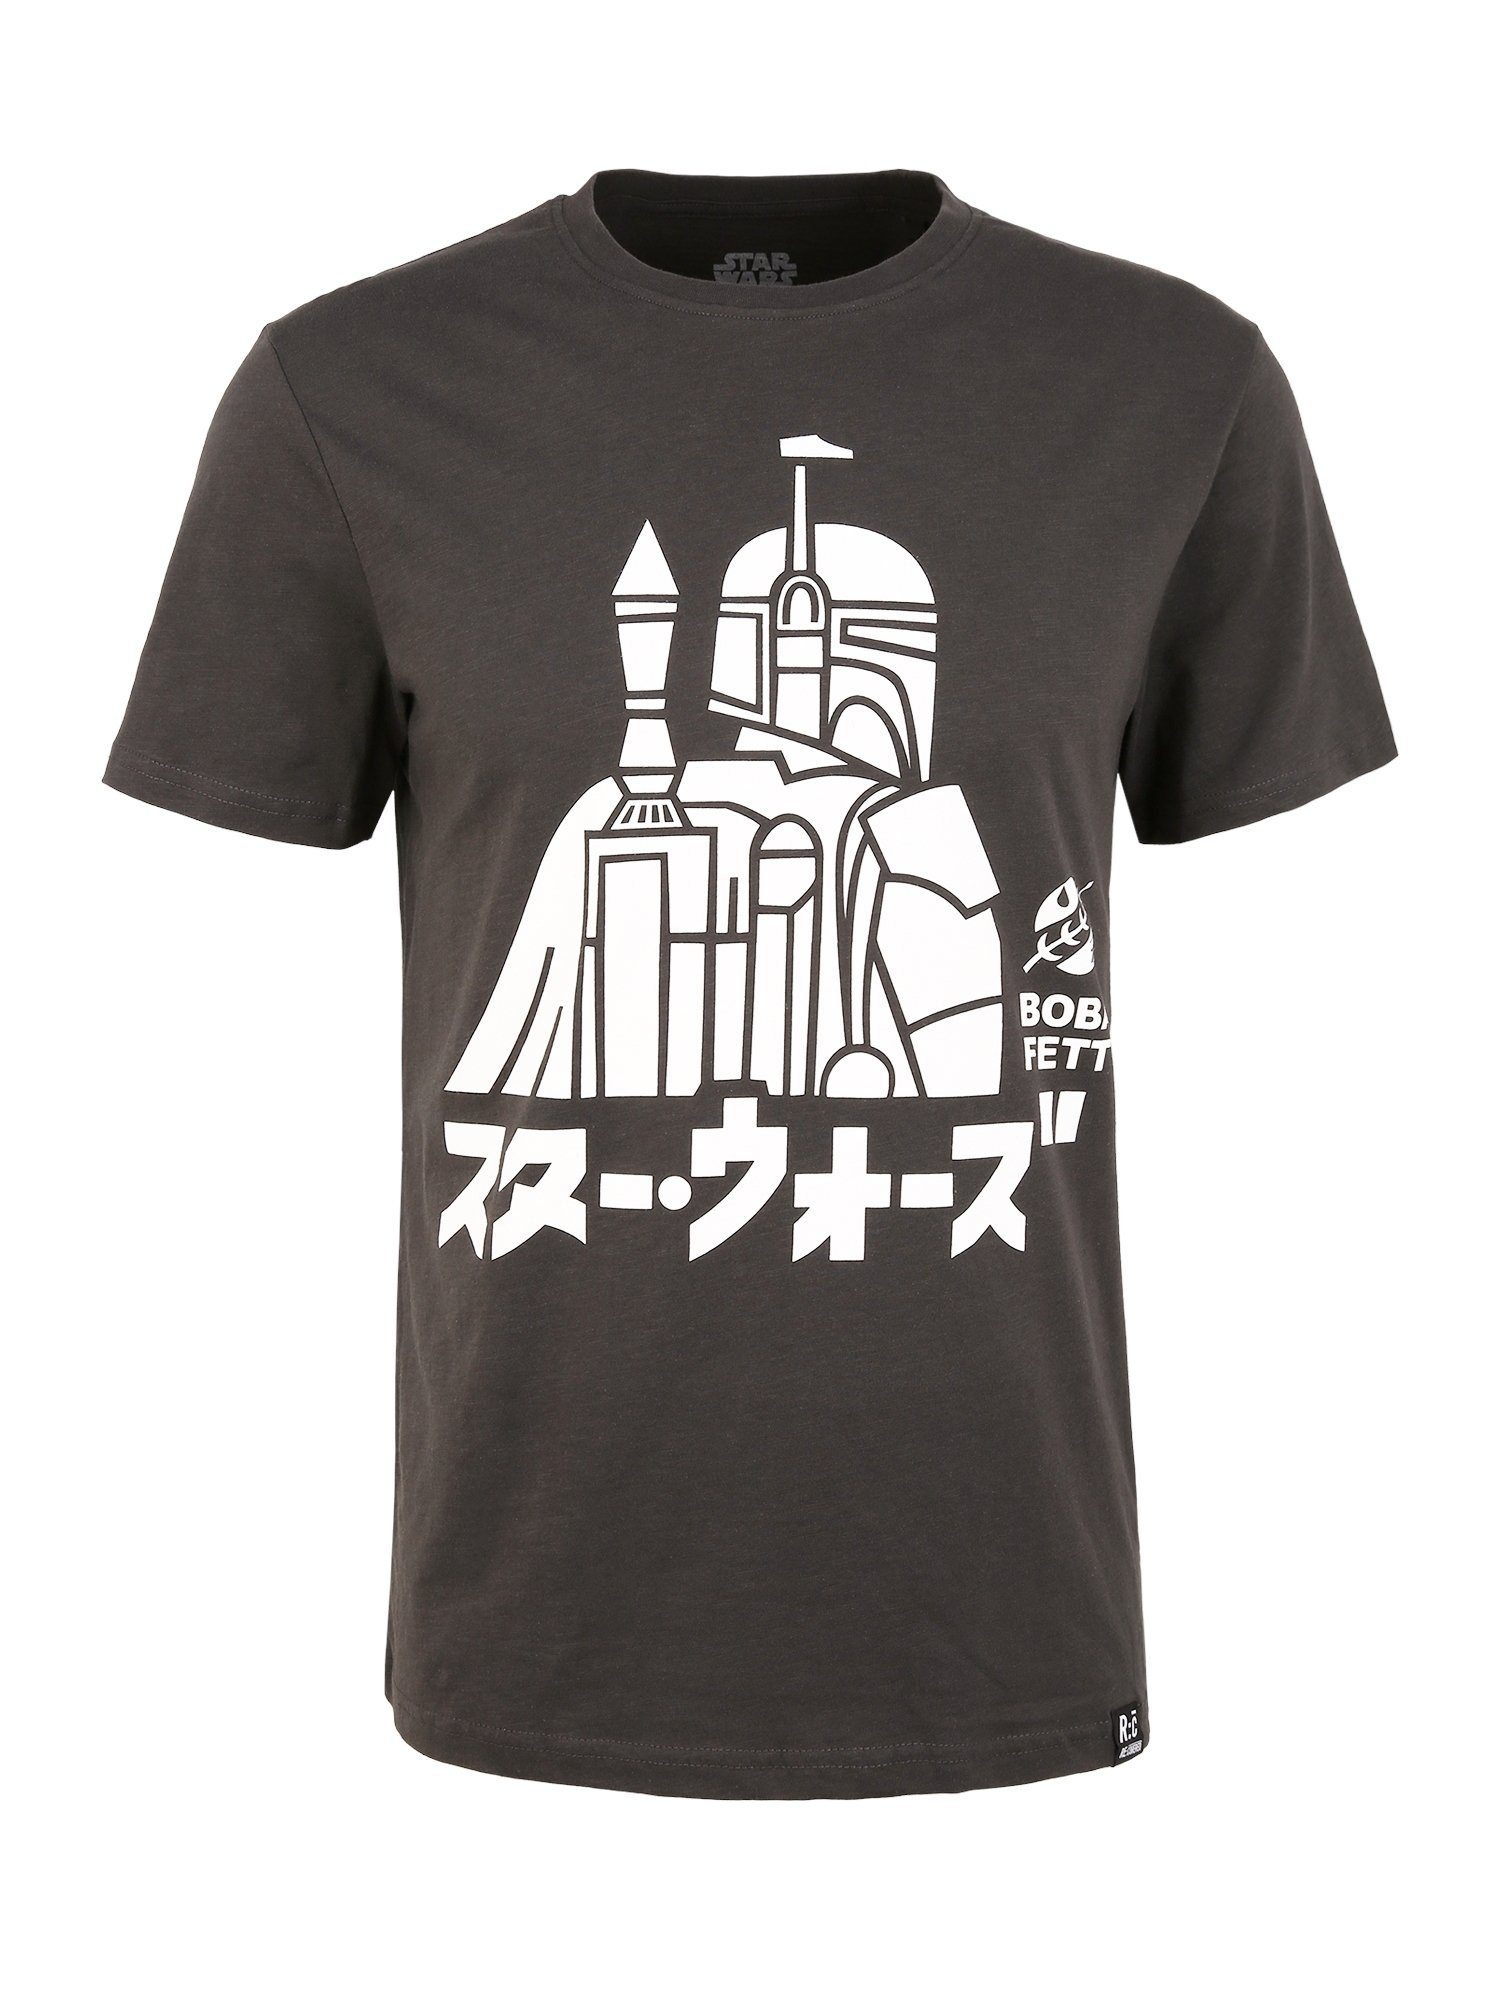 Fett T-Shirt Star Wars Recovered Japanese zertifizierte Schwarz GOTS Boba Bio-Baumwolle